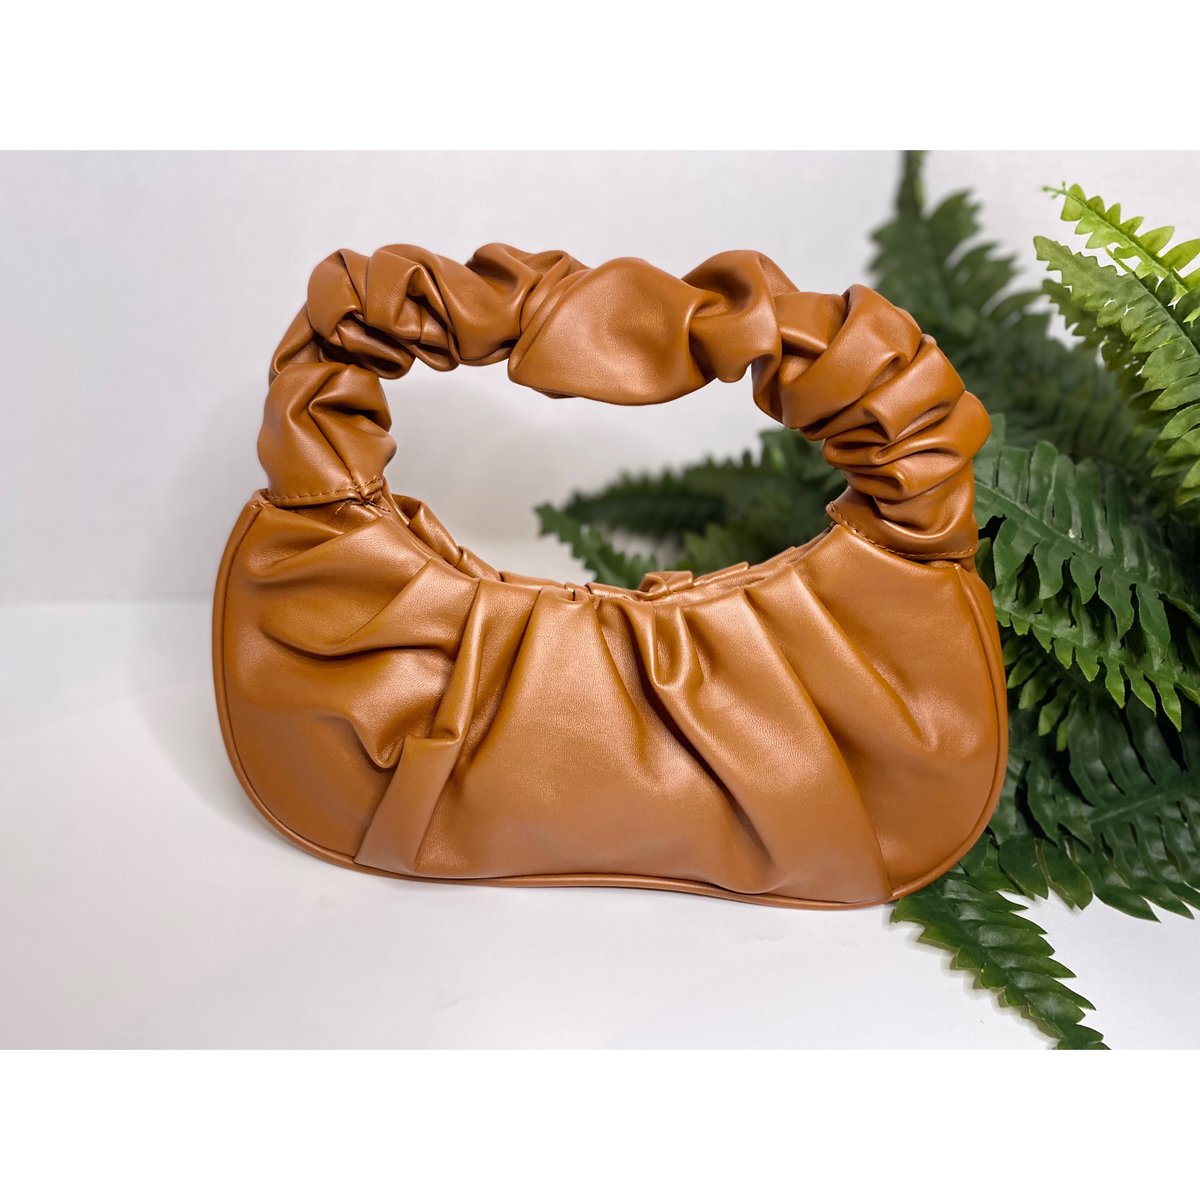 Image of Tan leather bag 